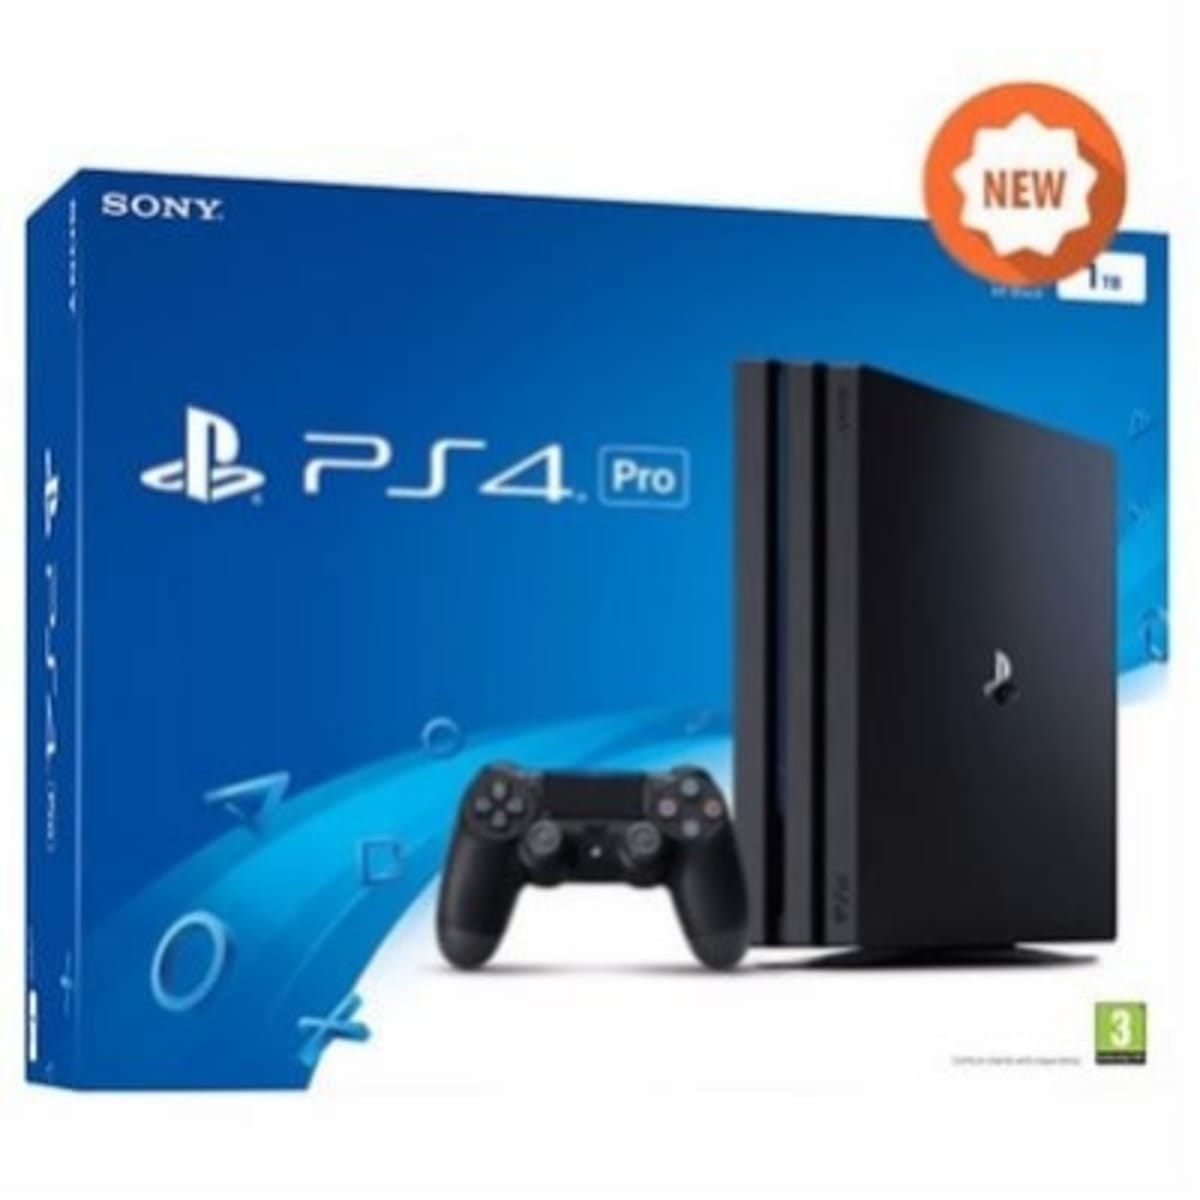 Sony Playstation 4 Pro - 1TB Console | Konga Online Shopping